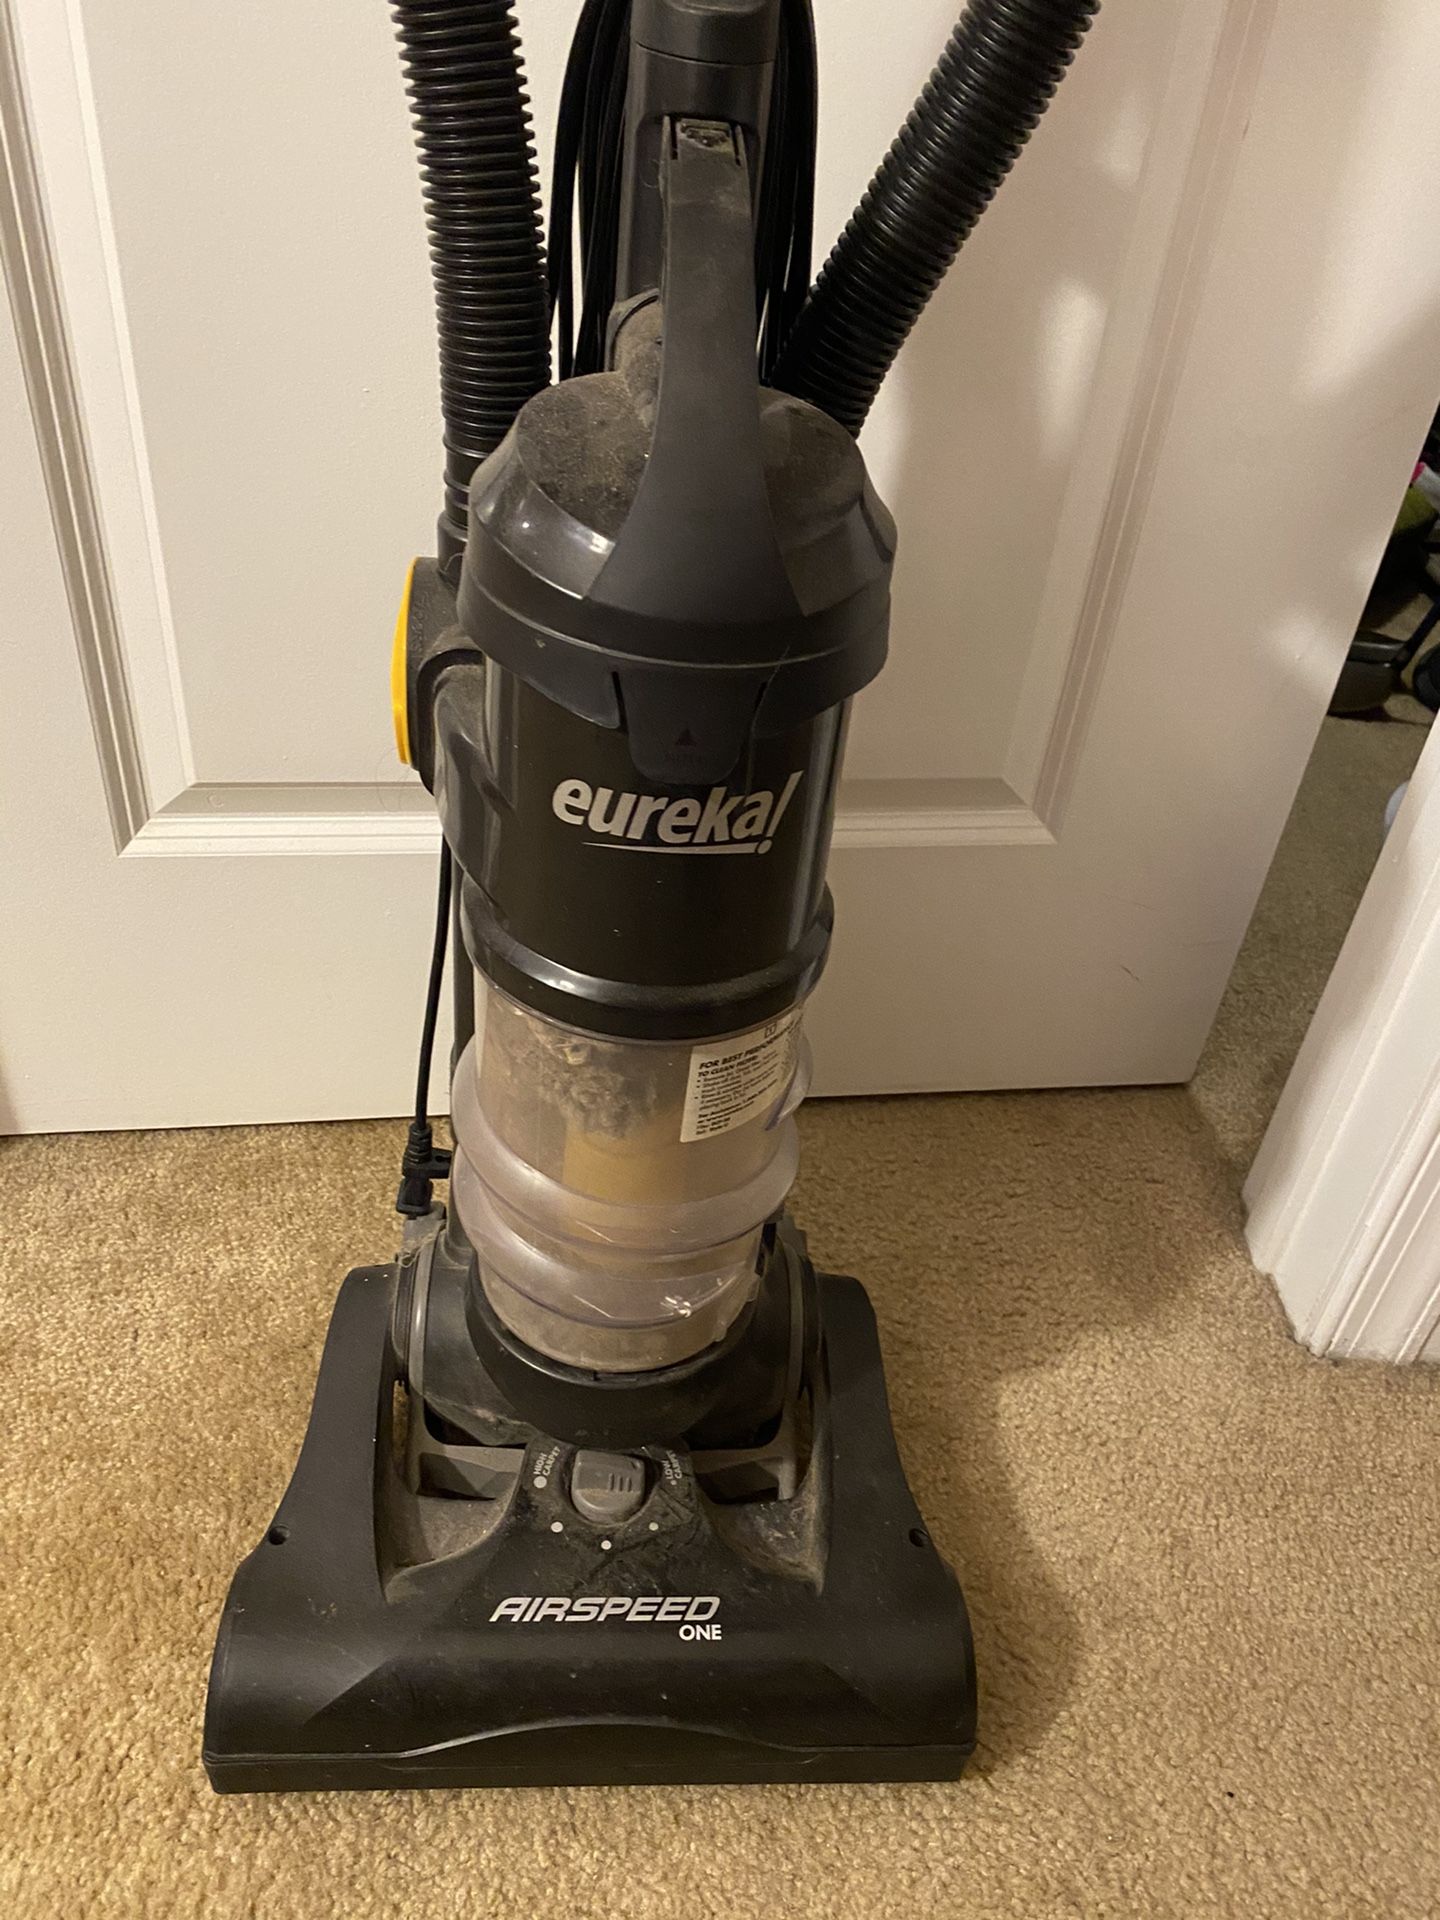 Eureka Airspeed vacuum